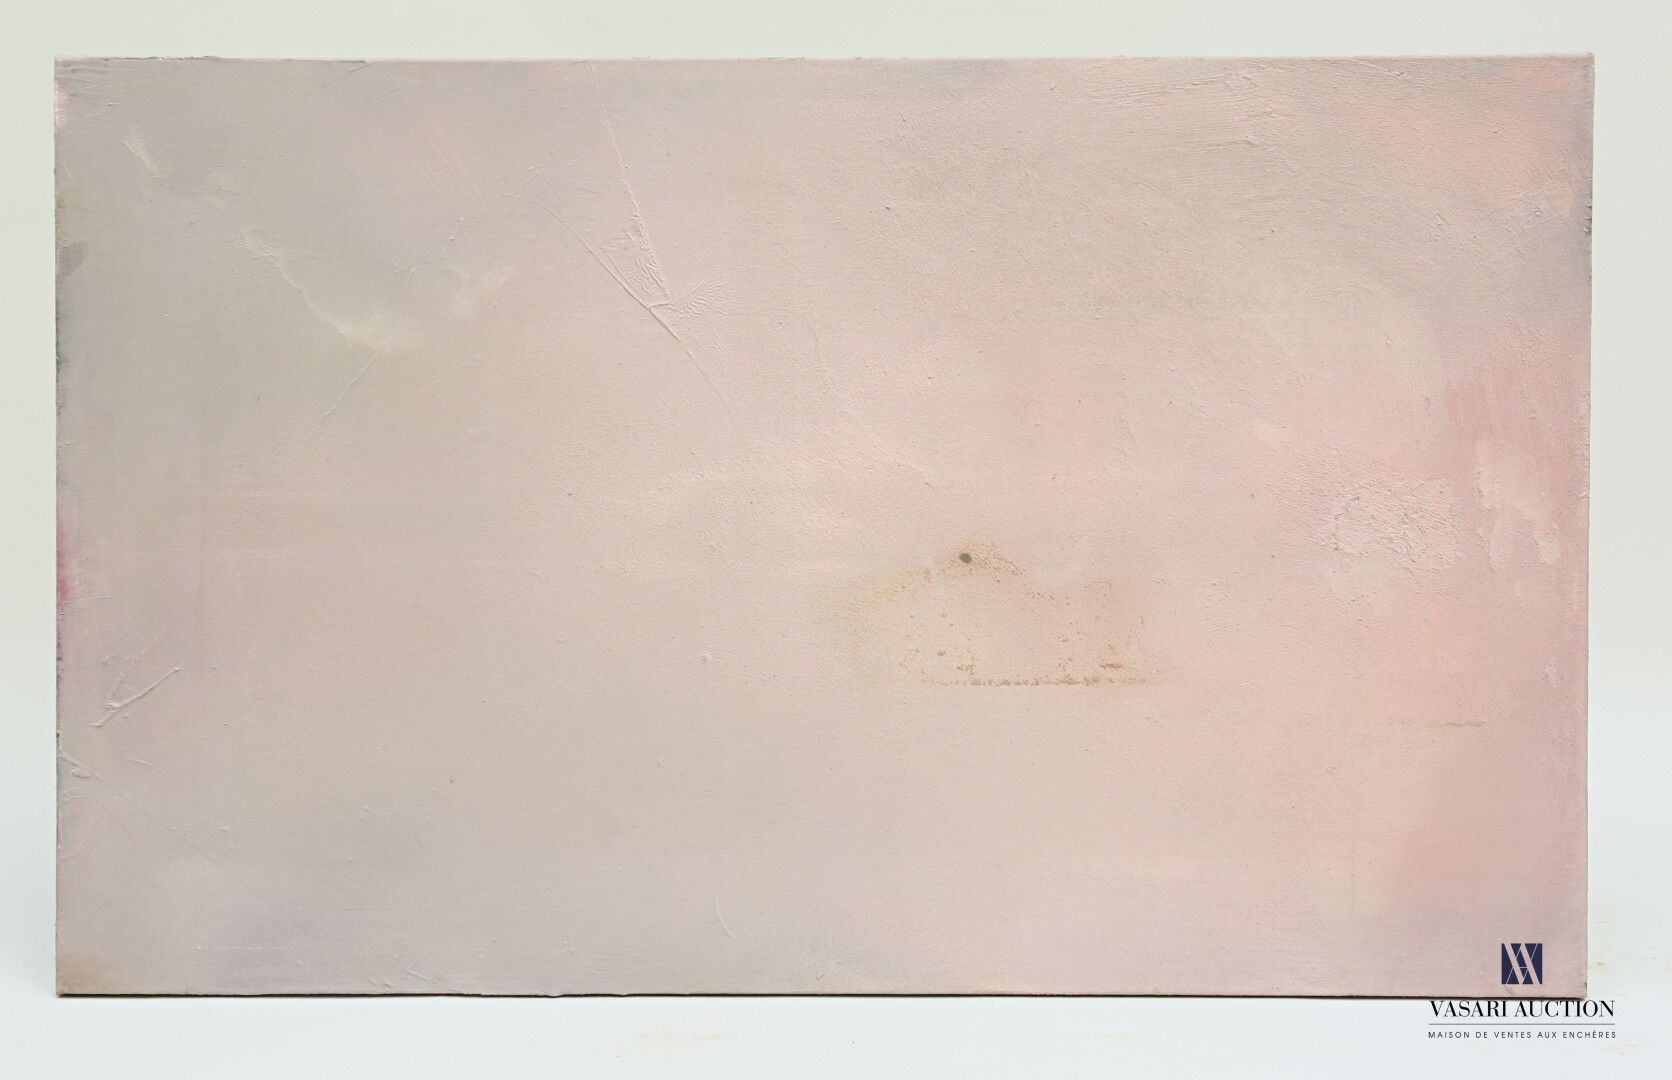 Null 帕萨尼蒂-弗朗西斯科（生于1952年

帕尔马单色

布面油画

无符号

(脏污)

81,5 x 130 cm